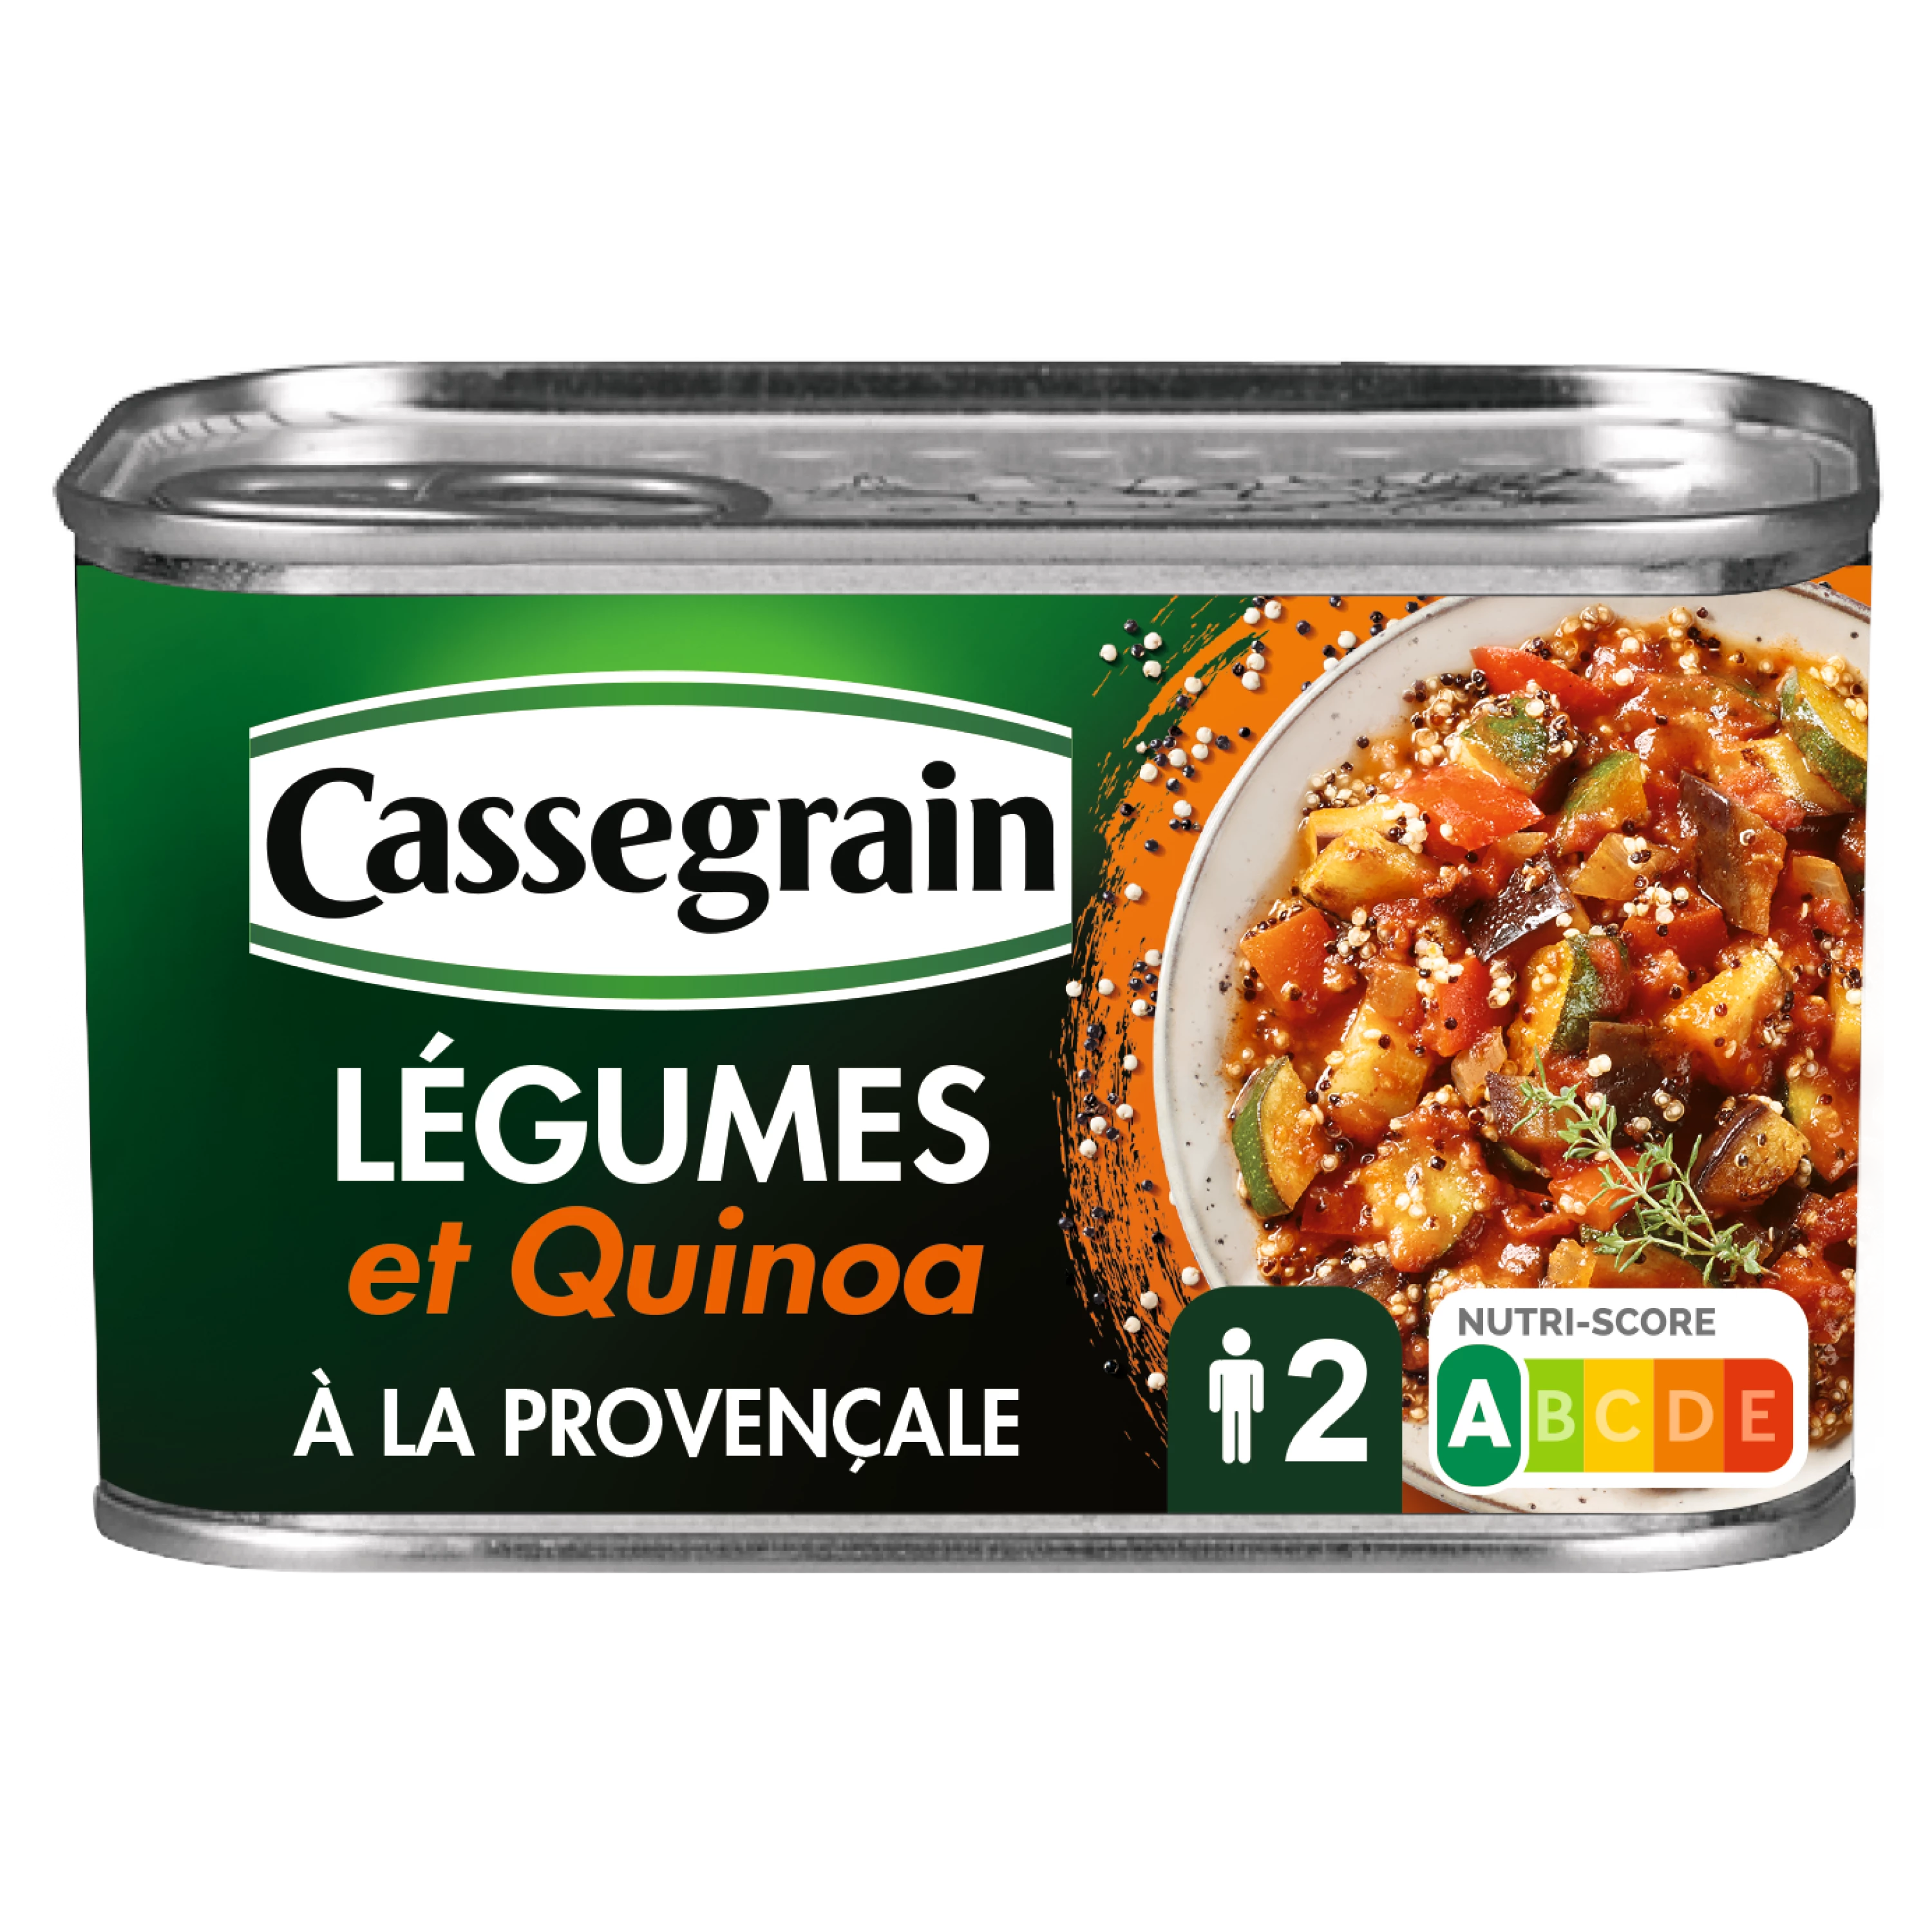 Légumes et Quinoa Cuisinés à La Provença le; 375g -  CASSEGRAIN